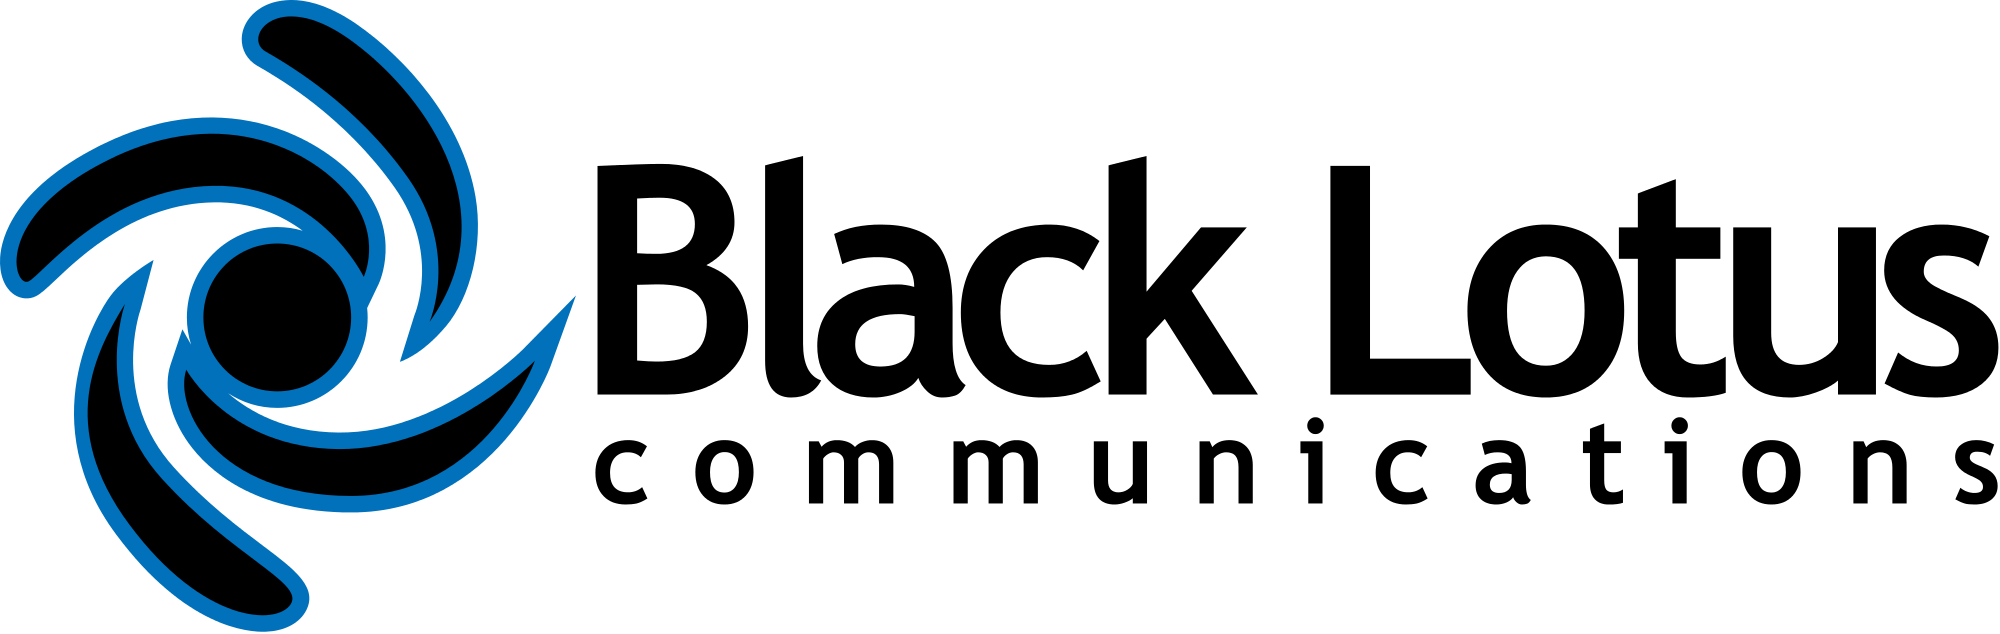 Black Lotus Logo - File:Black Lotus Communications logo.svg - Wikimedia Commons